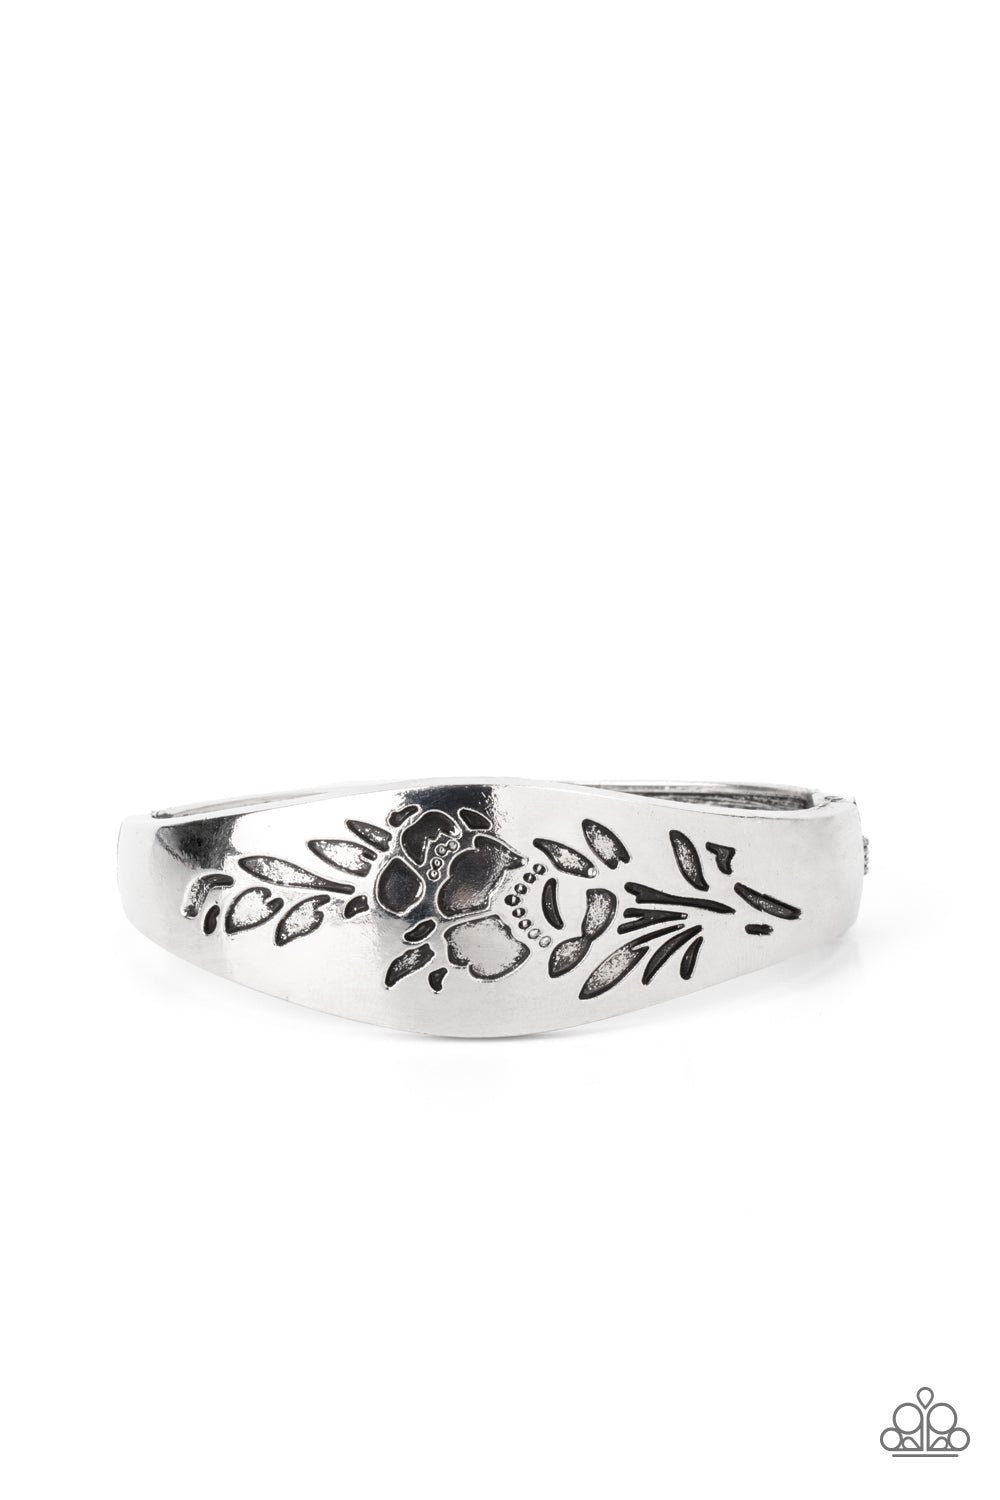 Fond of Florals - Silver Bracelet freeshipping - JewLz4u Gemstone Gallery